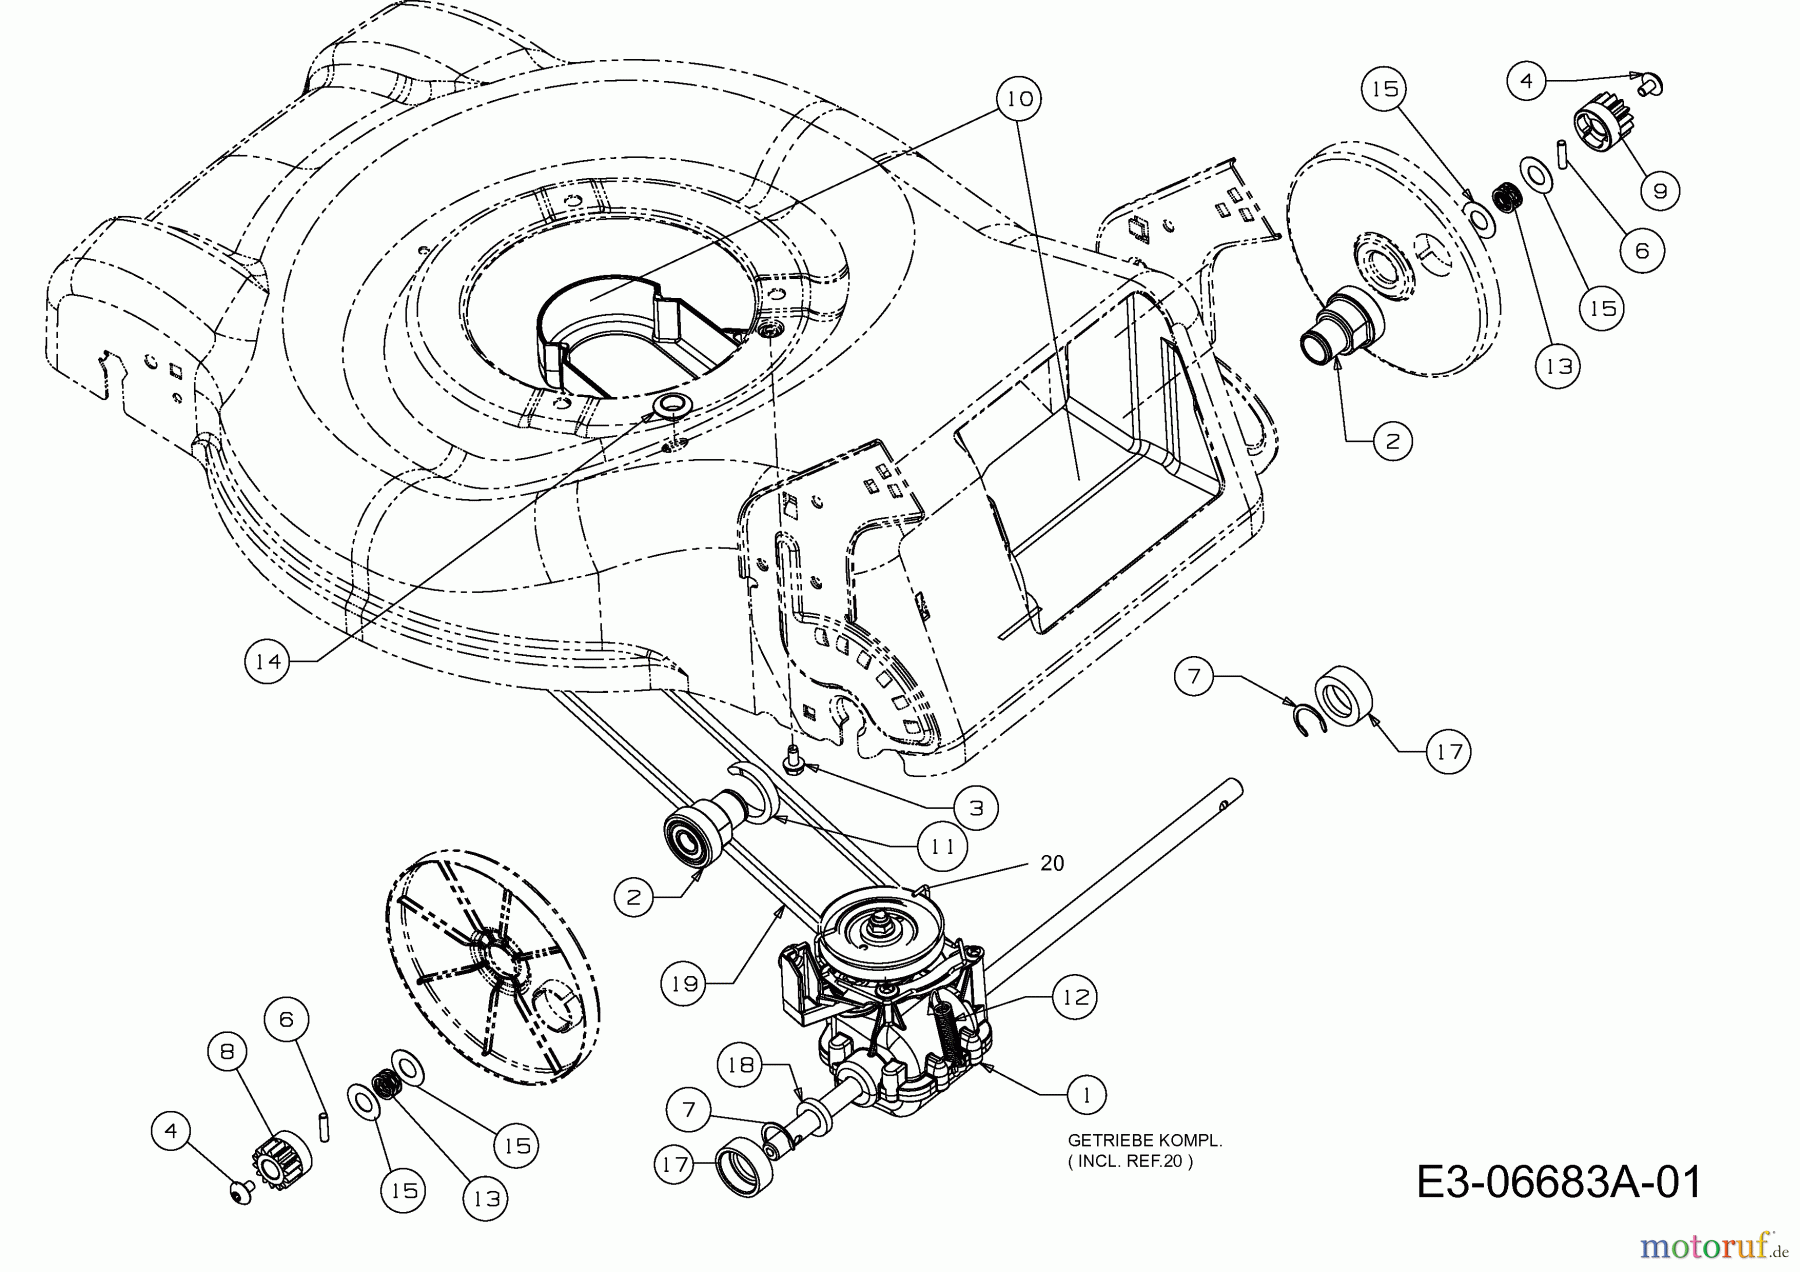  Sterwins Motormäher mit Antrieb 420 BTC 12A-I44M638  (2012) Getriebe